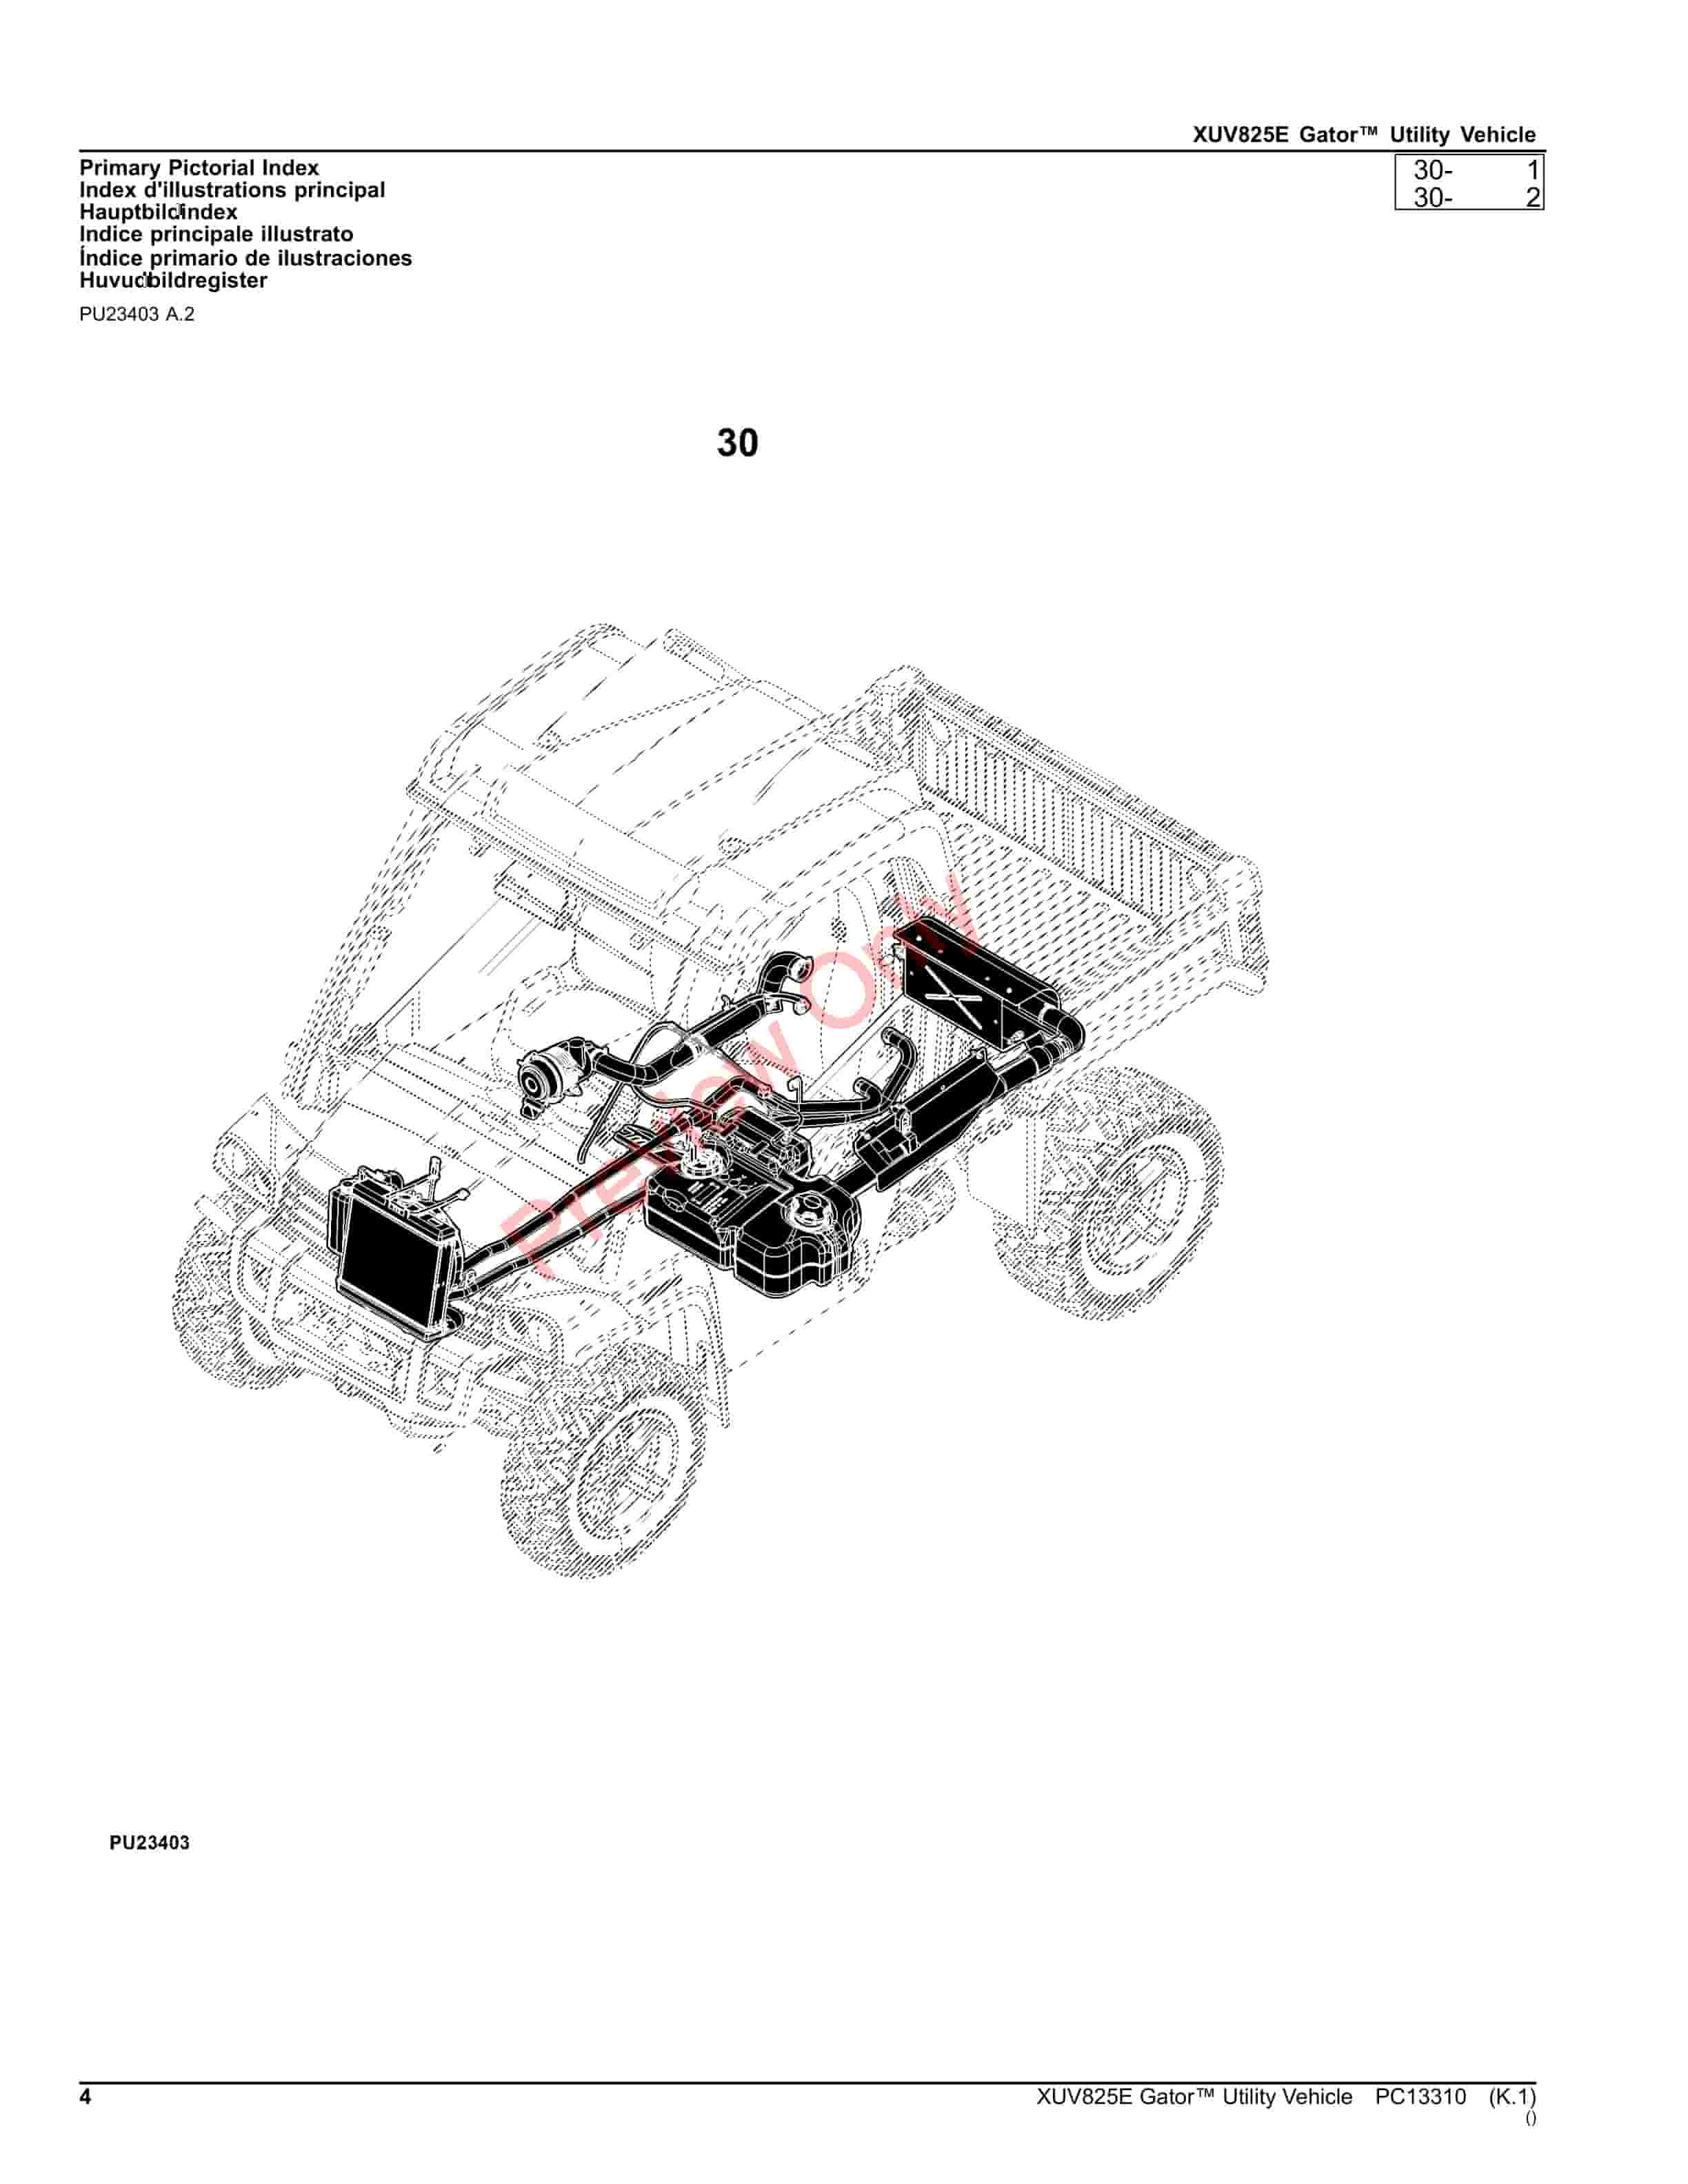 John Deere XUV825E Gator Utility Vehicle Parts Catalog PC13310 24AUG23-4